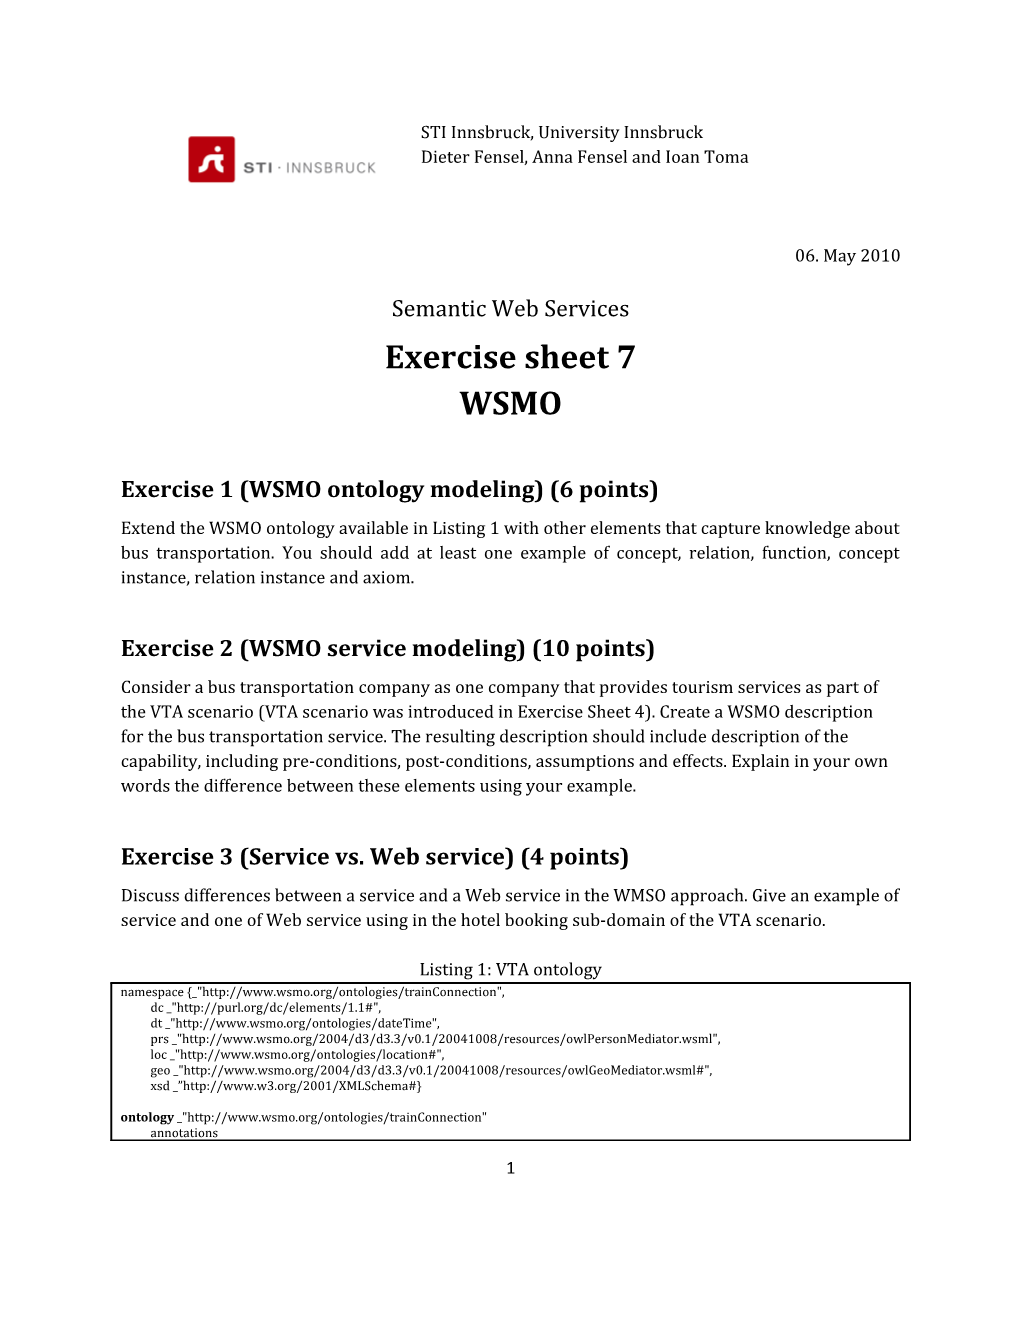 Semantic Web Services Exercise Sheet 7